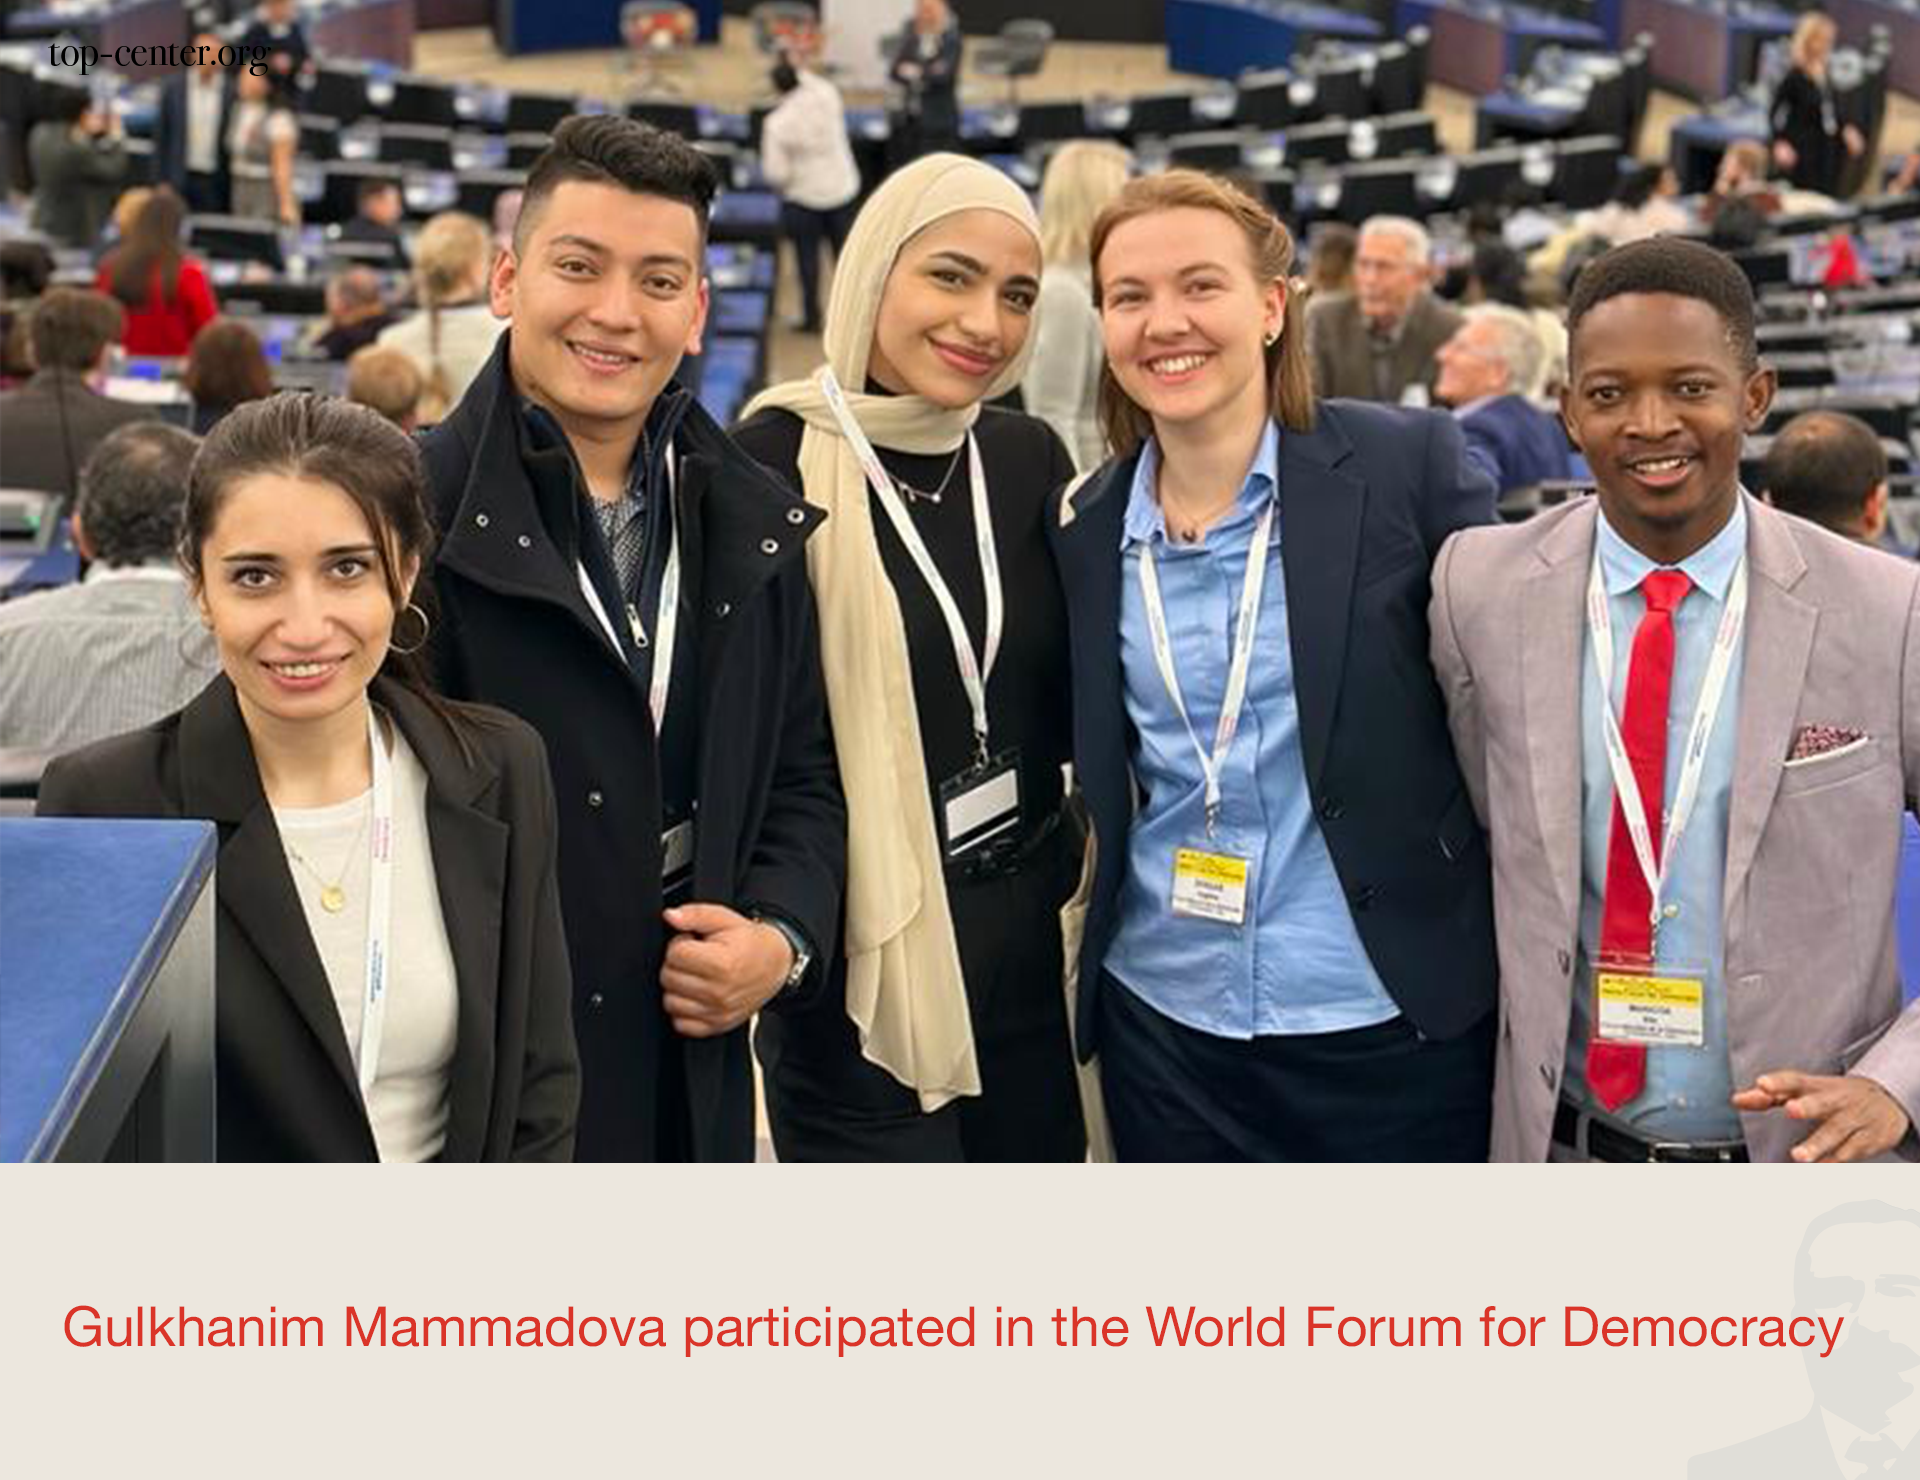 Gulkhanim Mammadova participated in the World Forum for Democracy